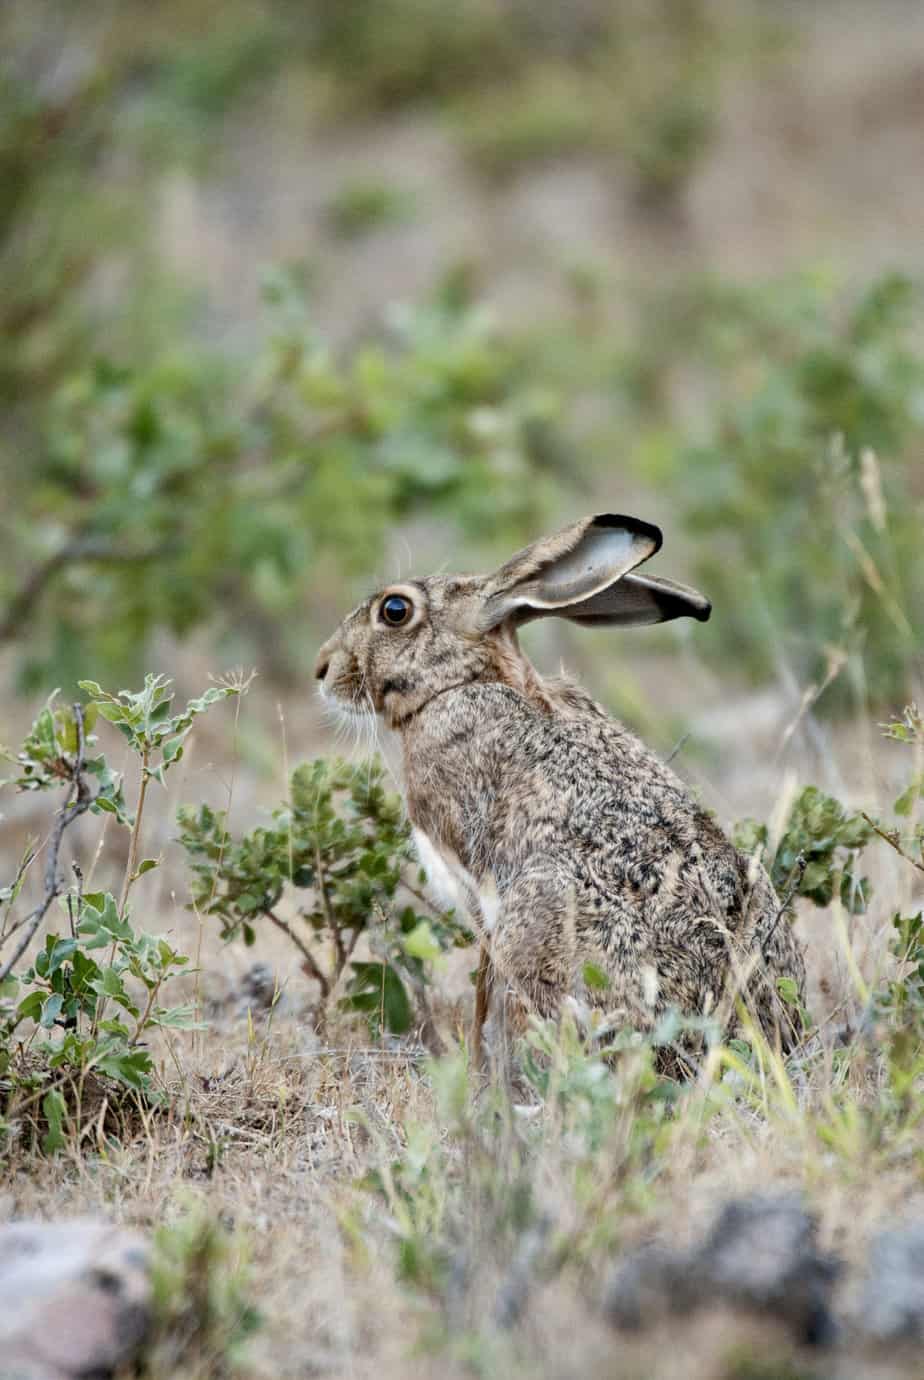 wild rabbit in a brushy environment